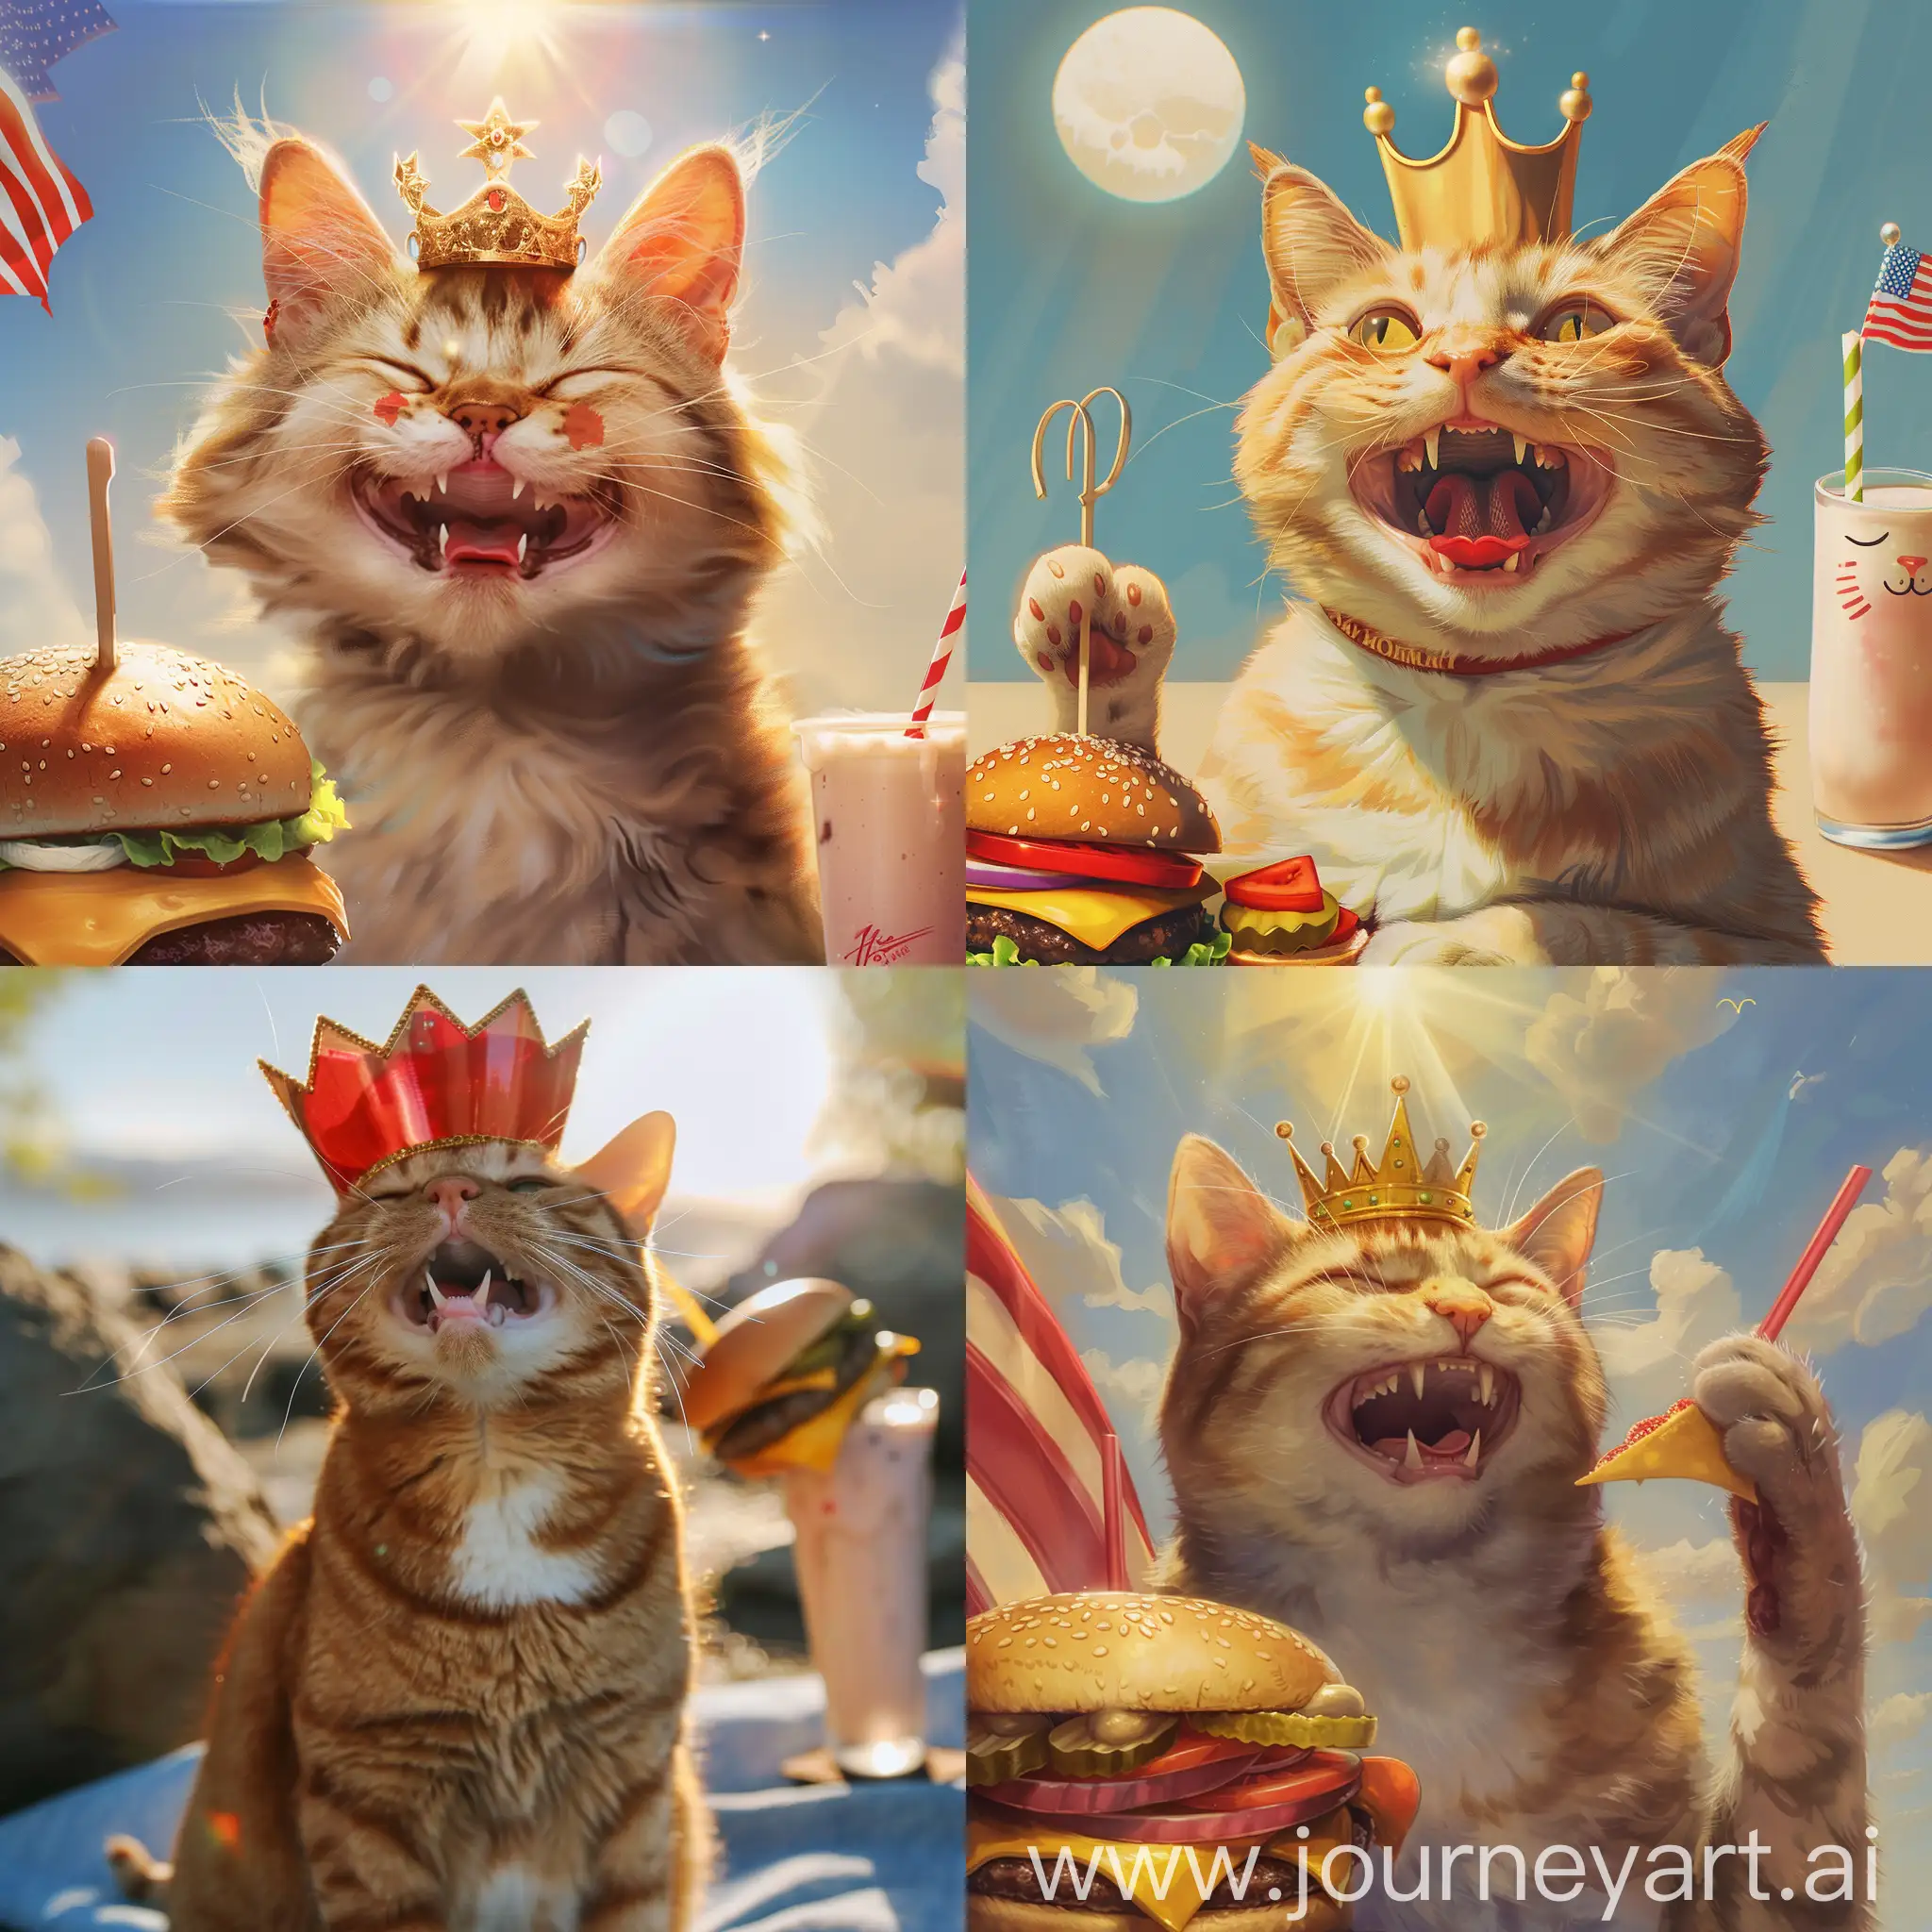 Smiling-American-Cat-Enjoying-a-Cheeseburger-and-Milkshake-in-the-Sun